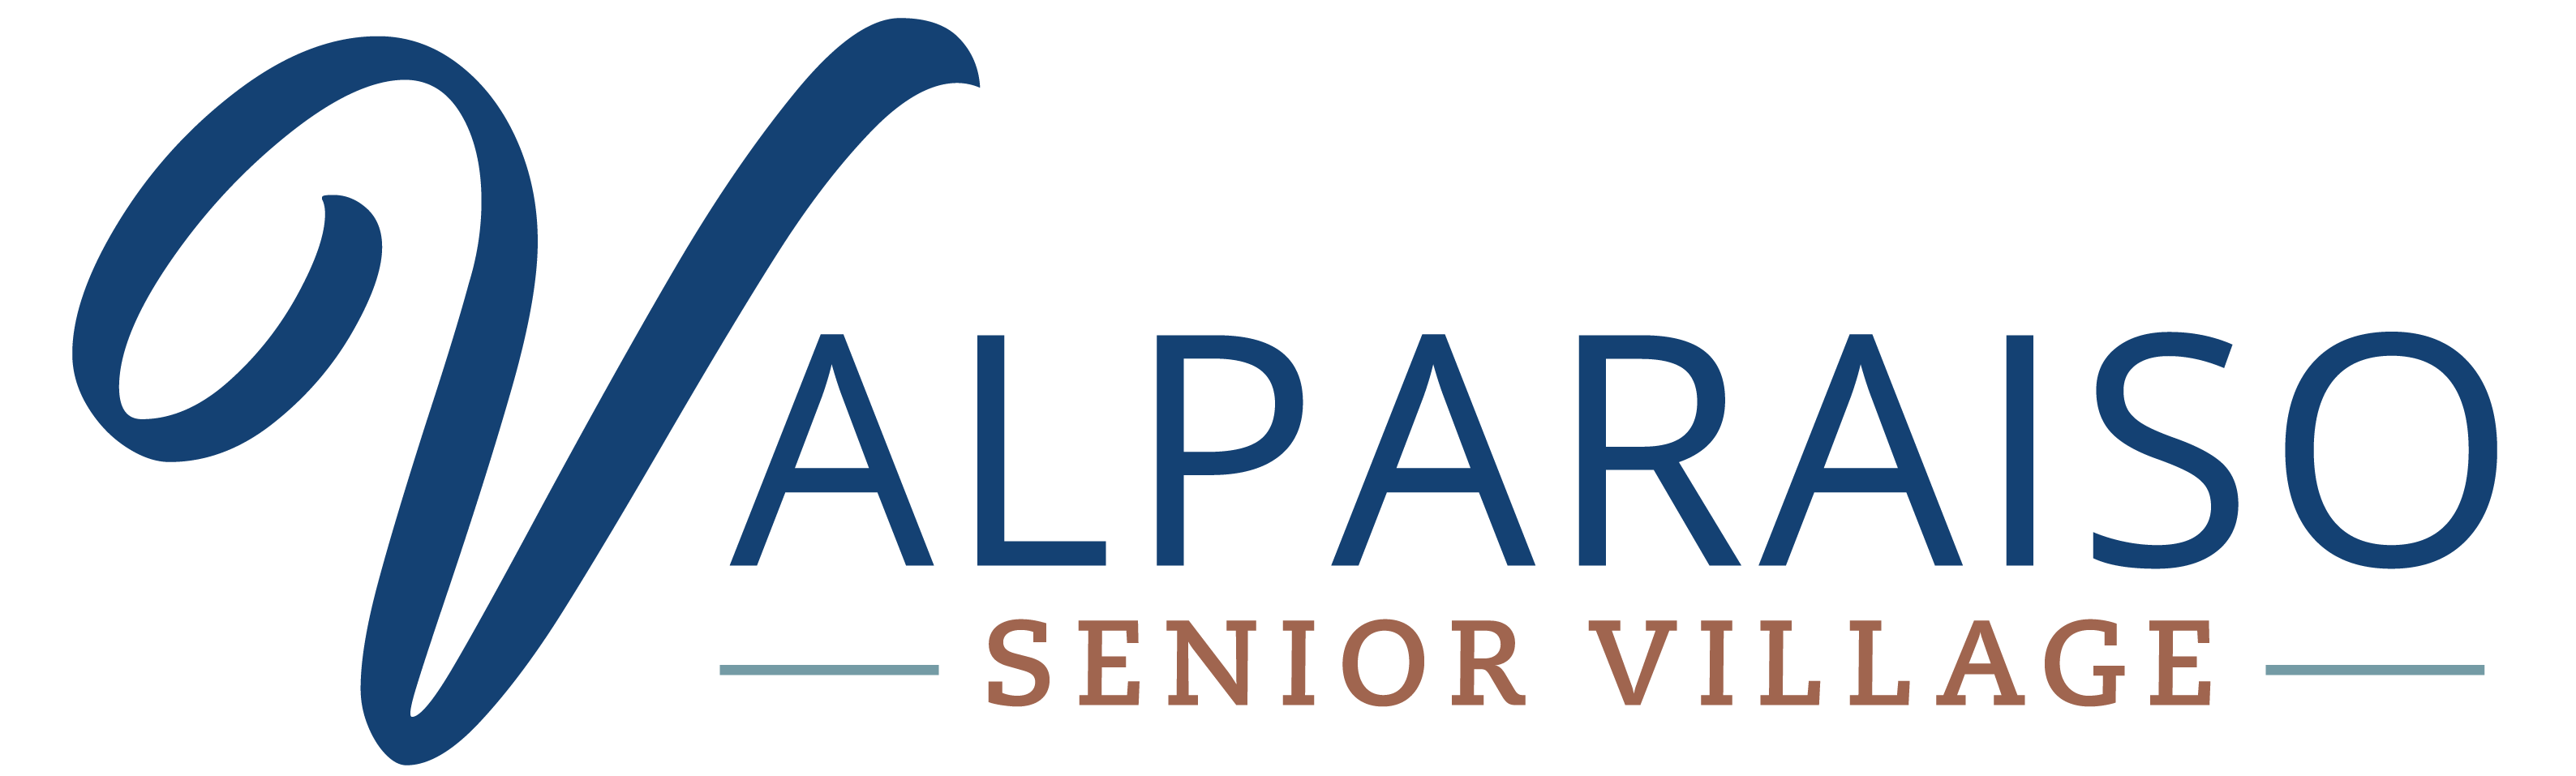 Valparaiso Senior Village 